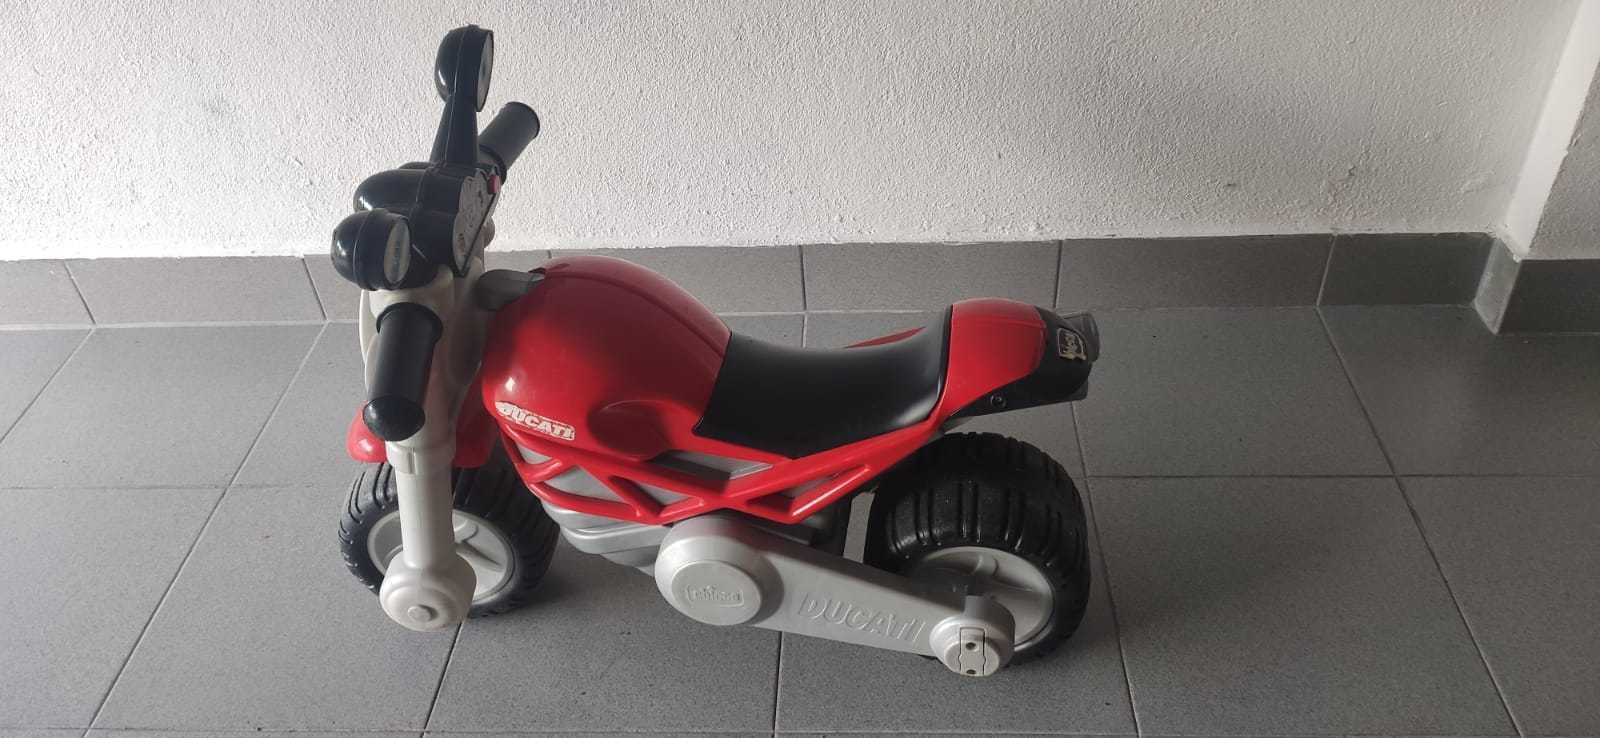 Mota criança Ducati